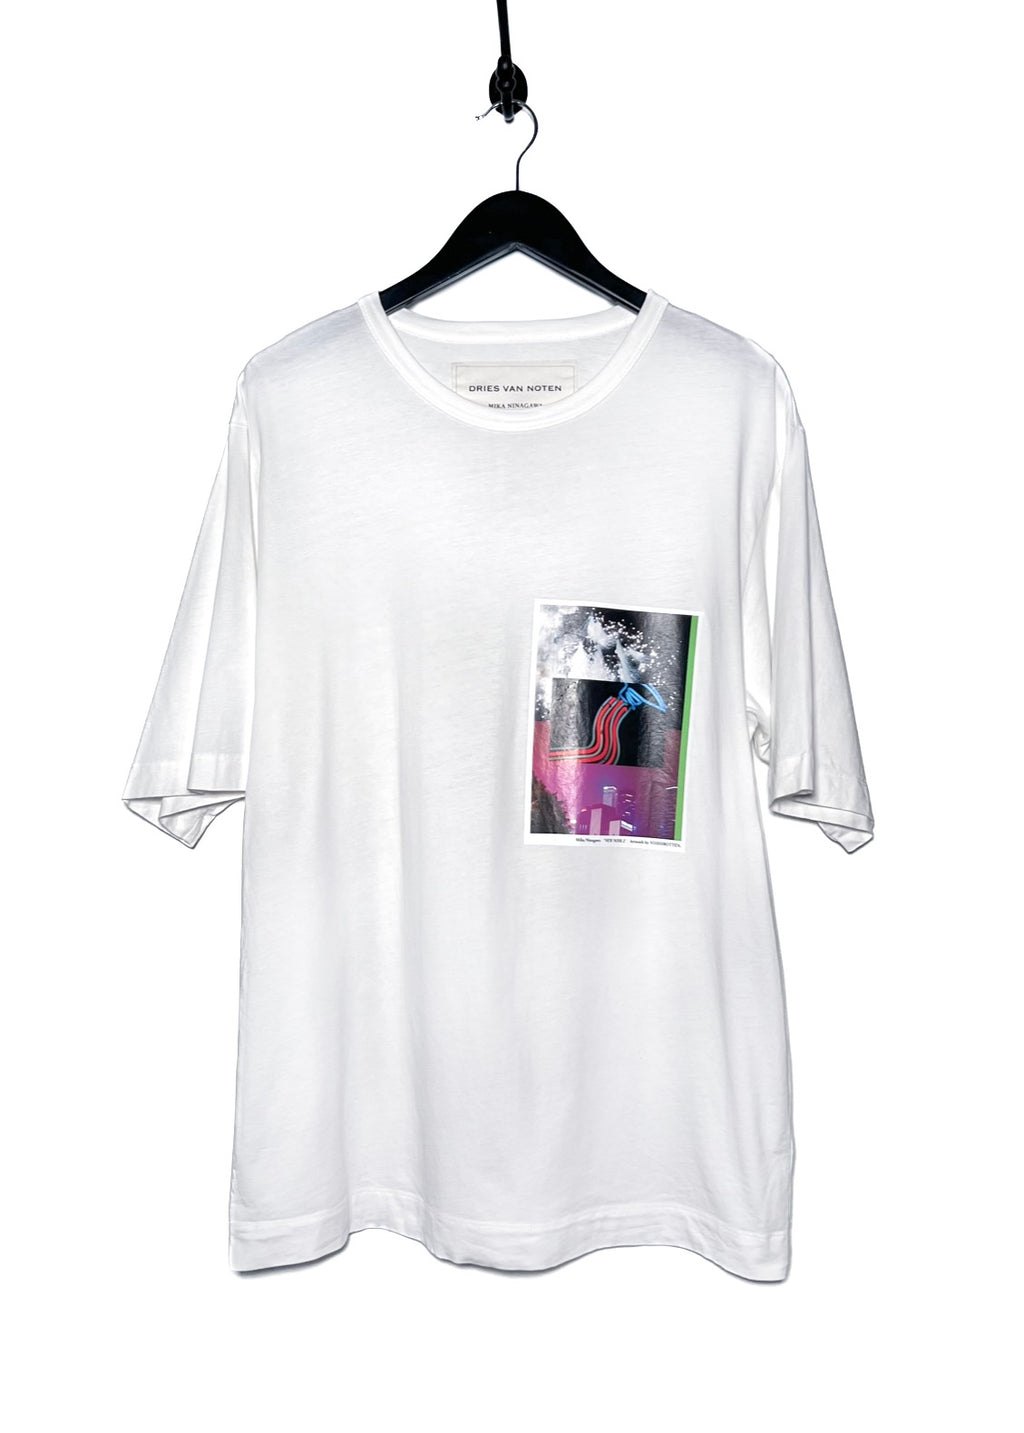 Dries Van Noten X Mika Ninagawa "New Noir 2" White Appliqué T-shirt